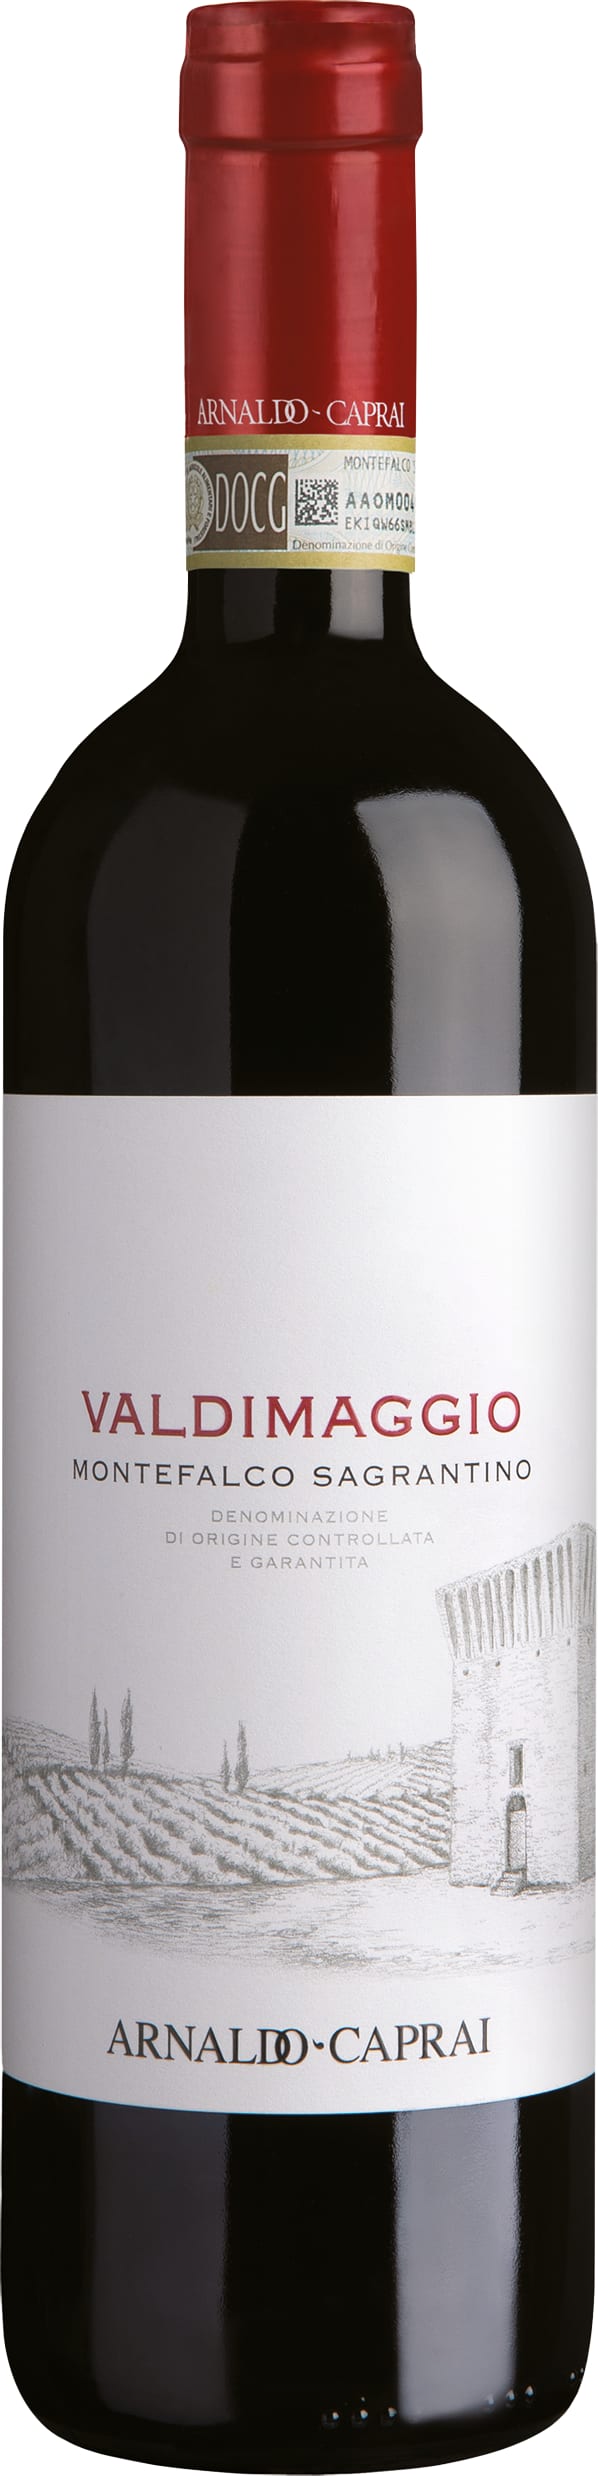 Arnaldo Caprai Sagrantino DOCG Valdimaggio 2018 75cl - Buy Arnaldo Caprai Wines from GREAT WINES DIRECT wine shop